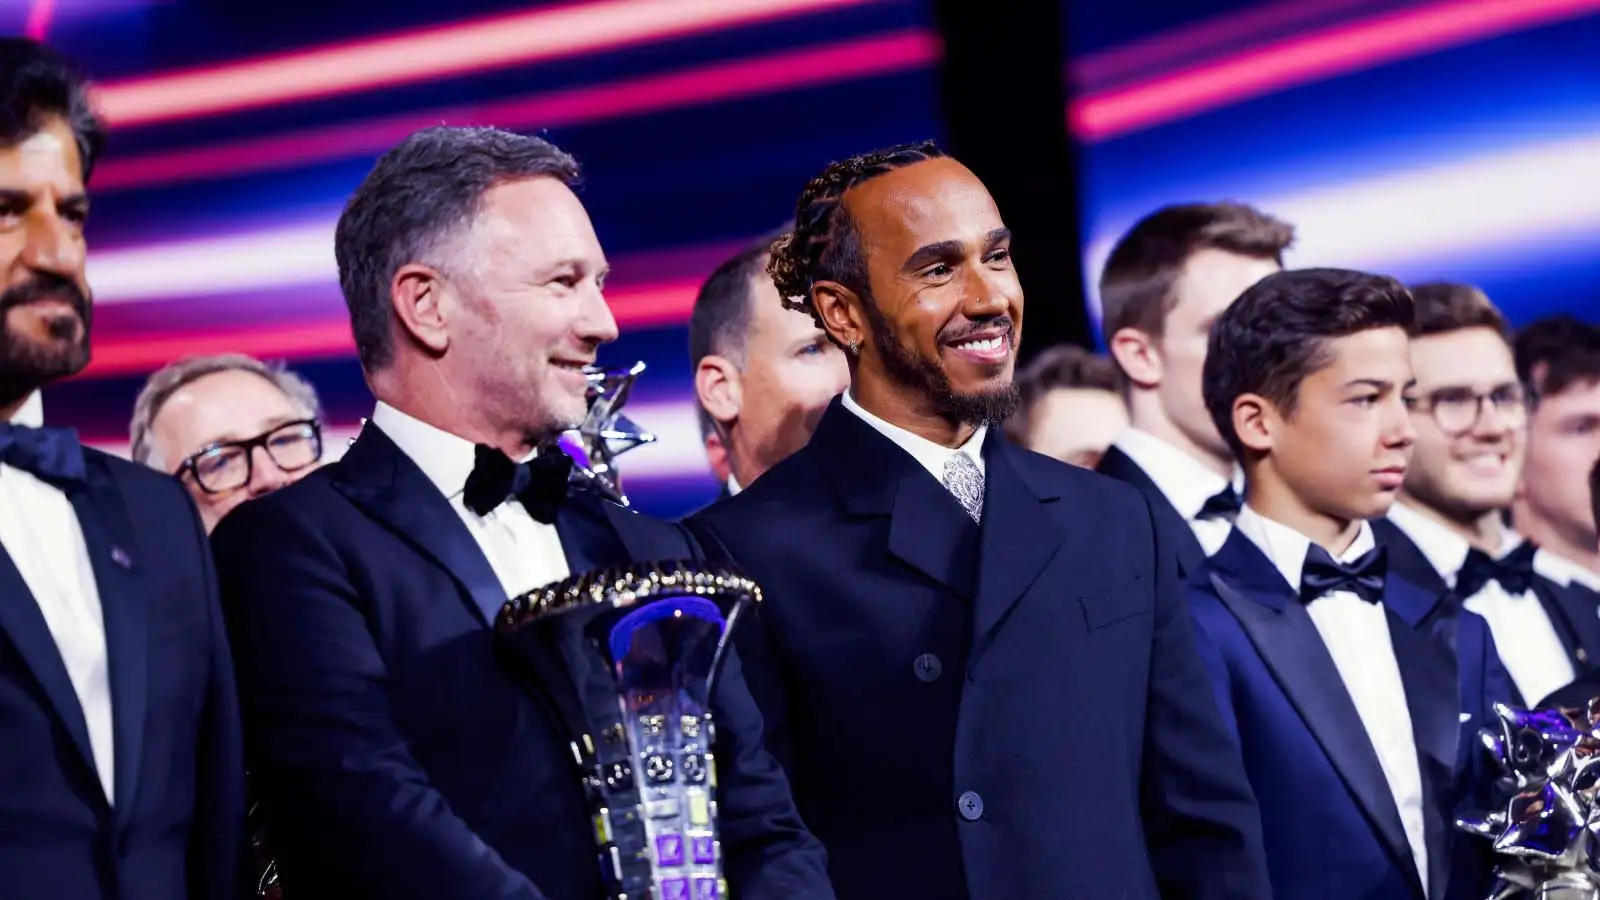 Lewis Hamilton alongside Christian Horner at the FIA Prize Giving Gala. F1 news